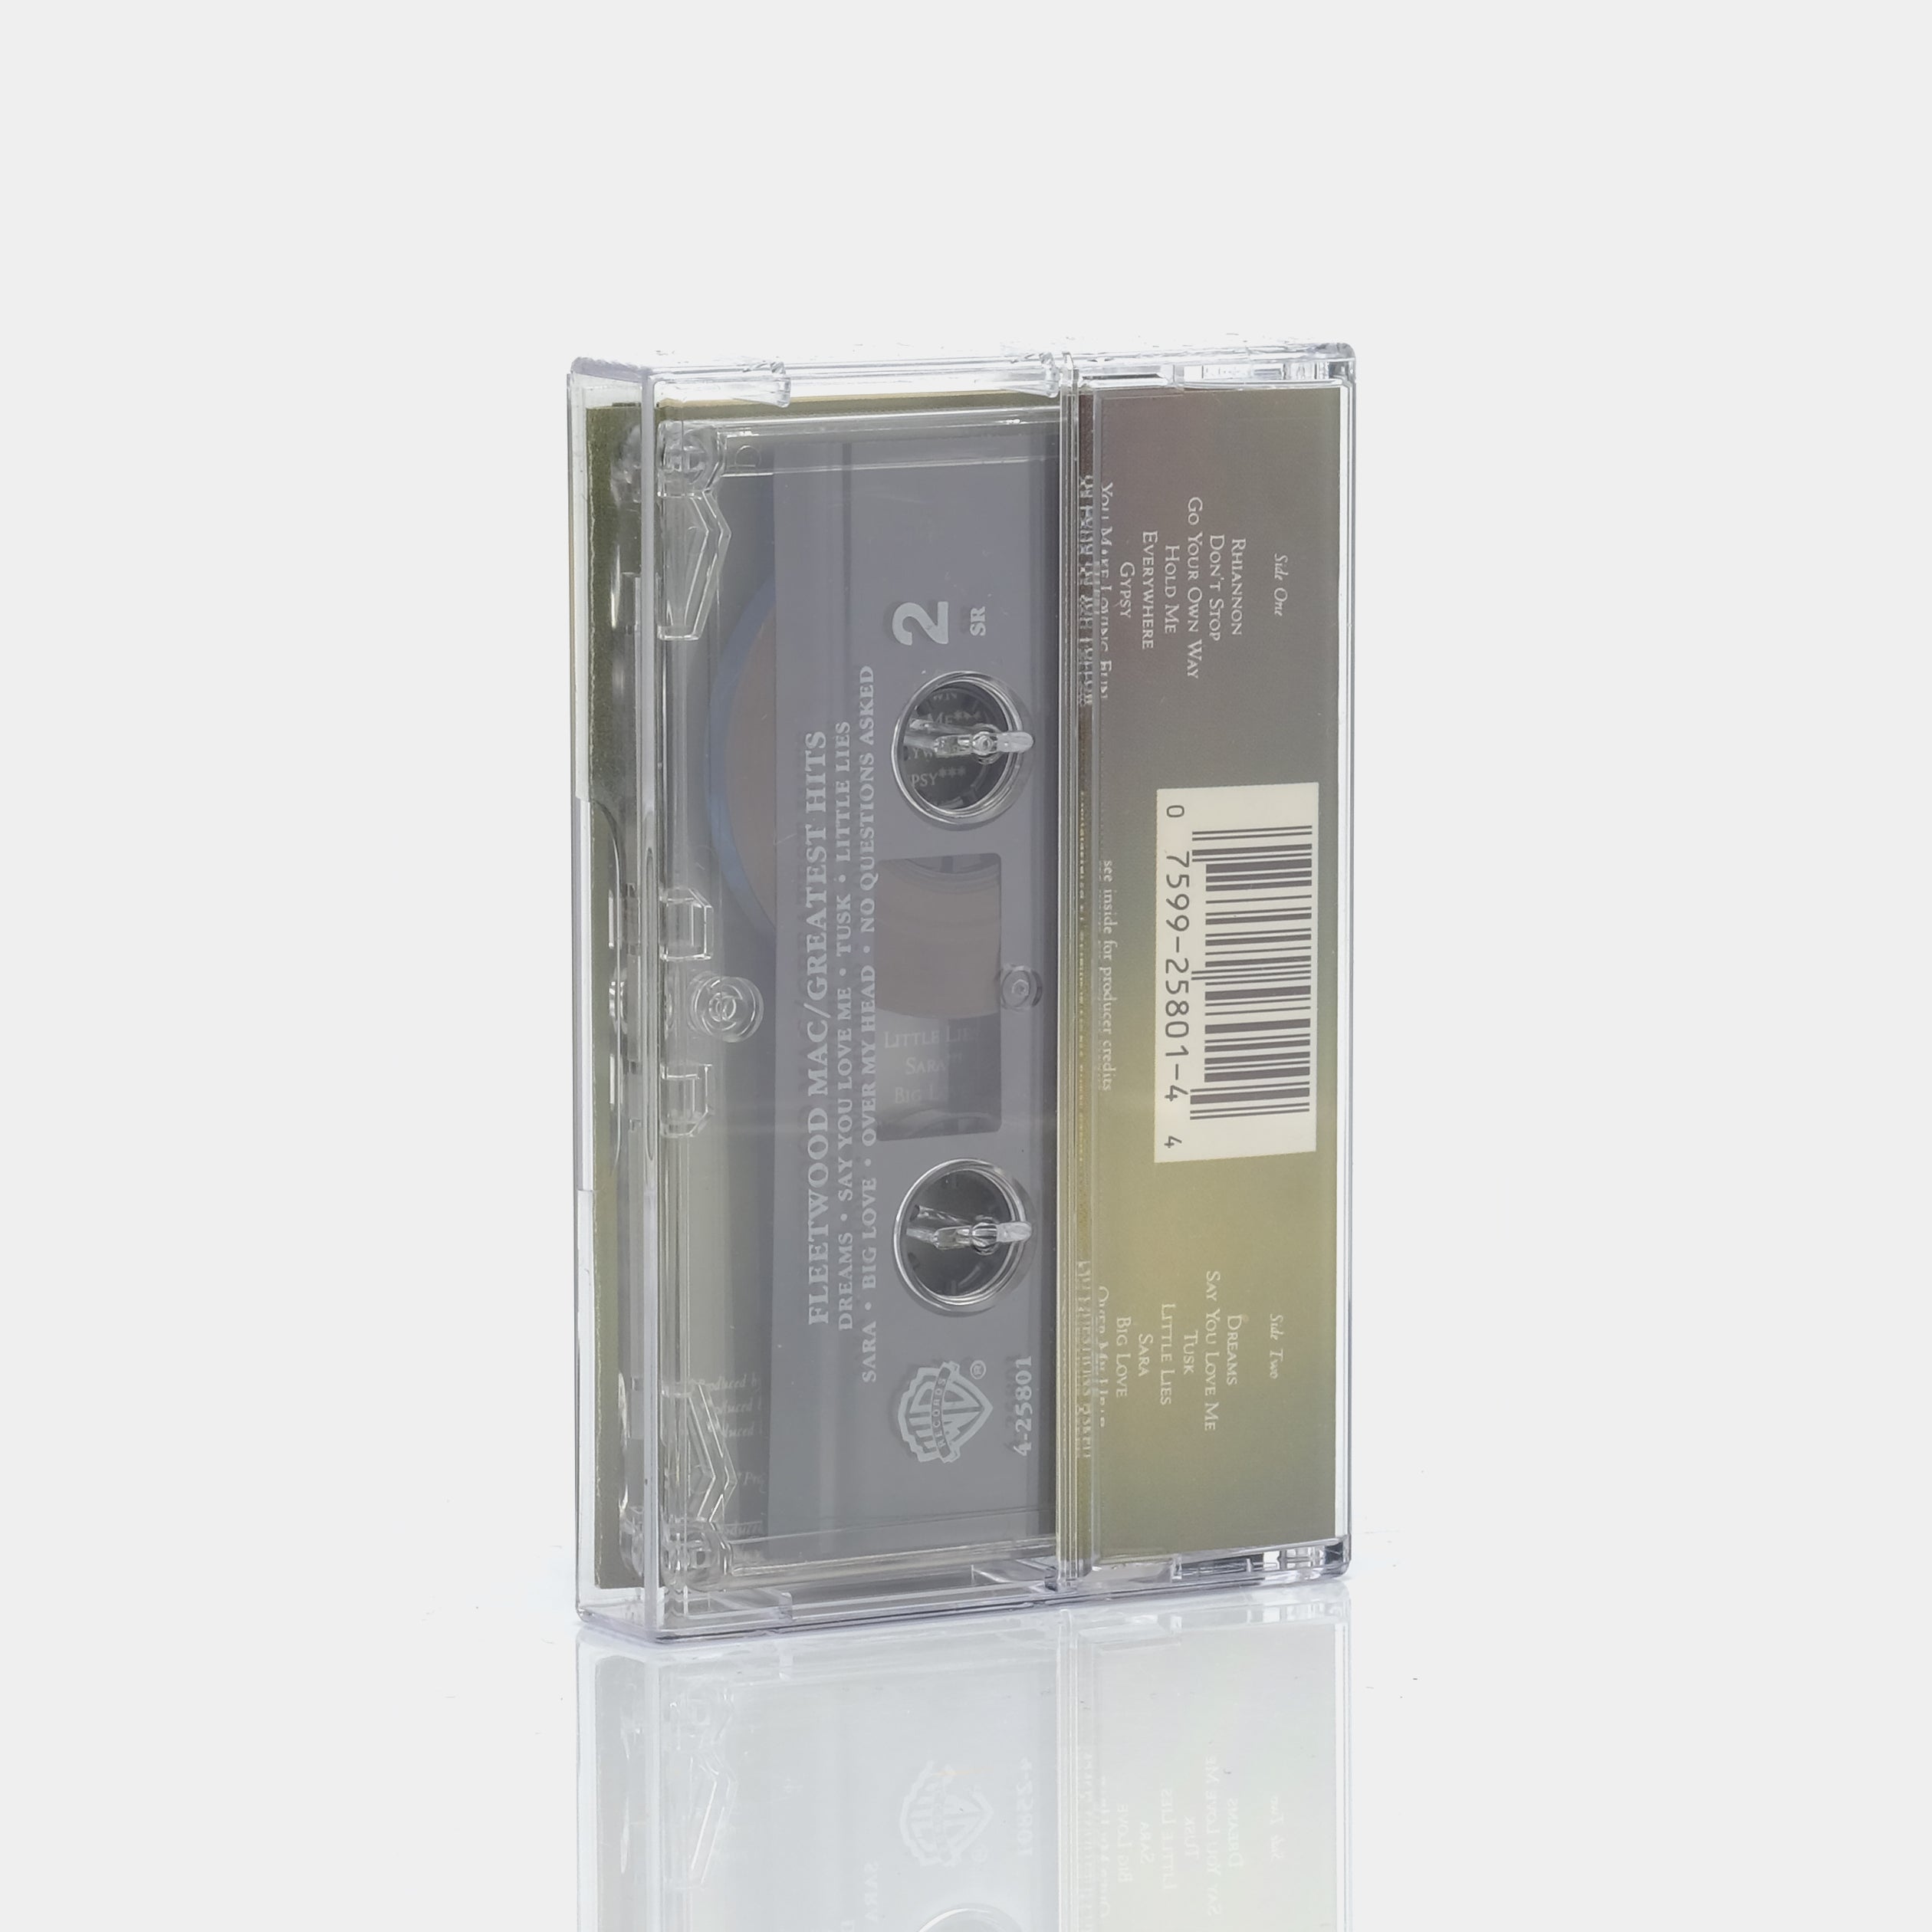 Fleetwood Mac - Greatest Hits (1988) Cassette Tape